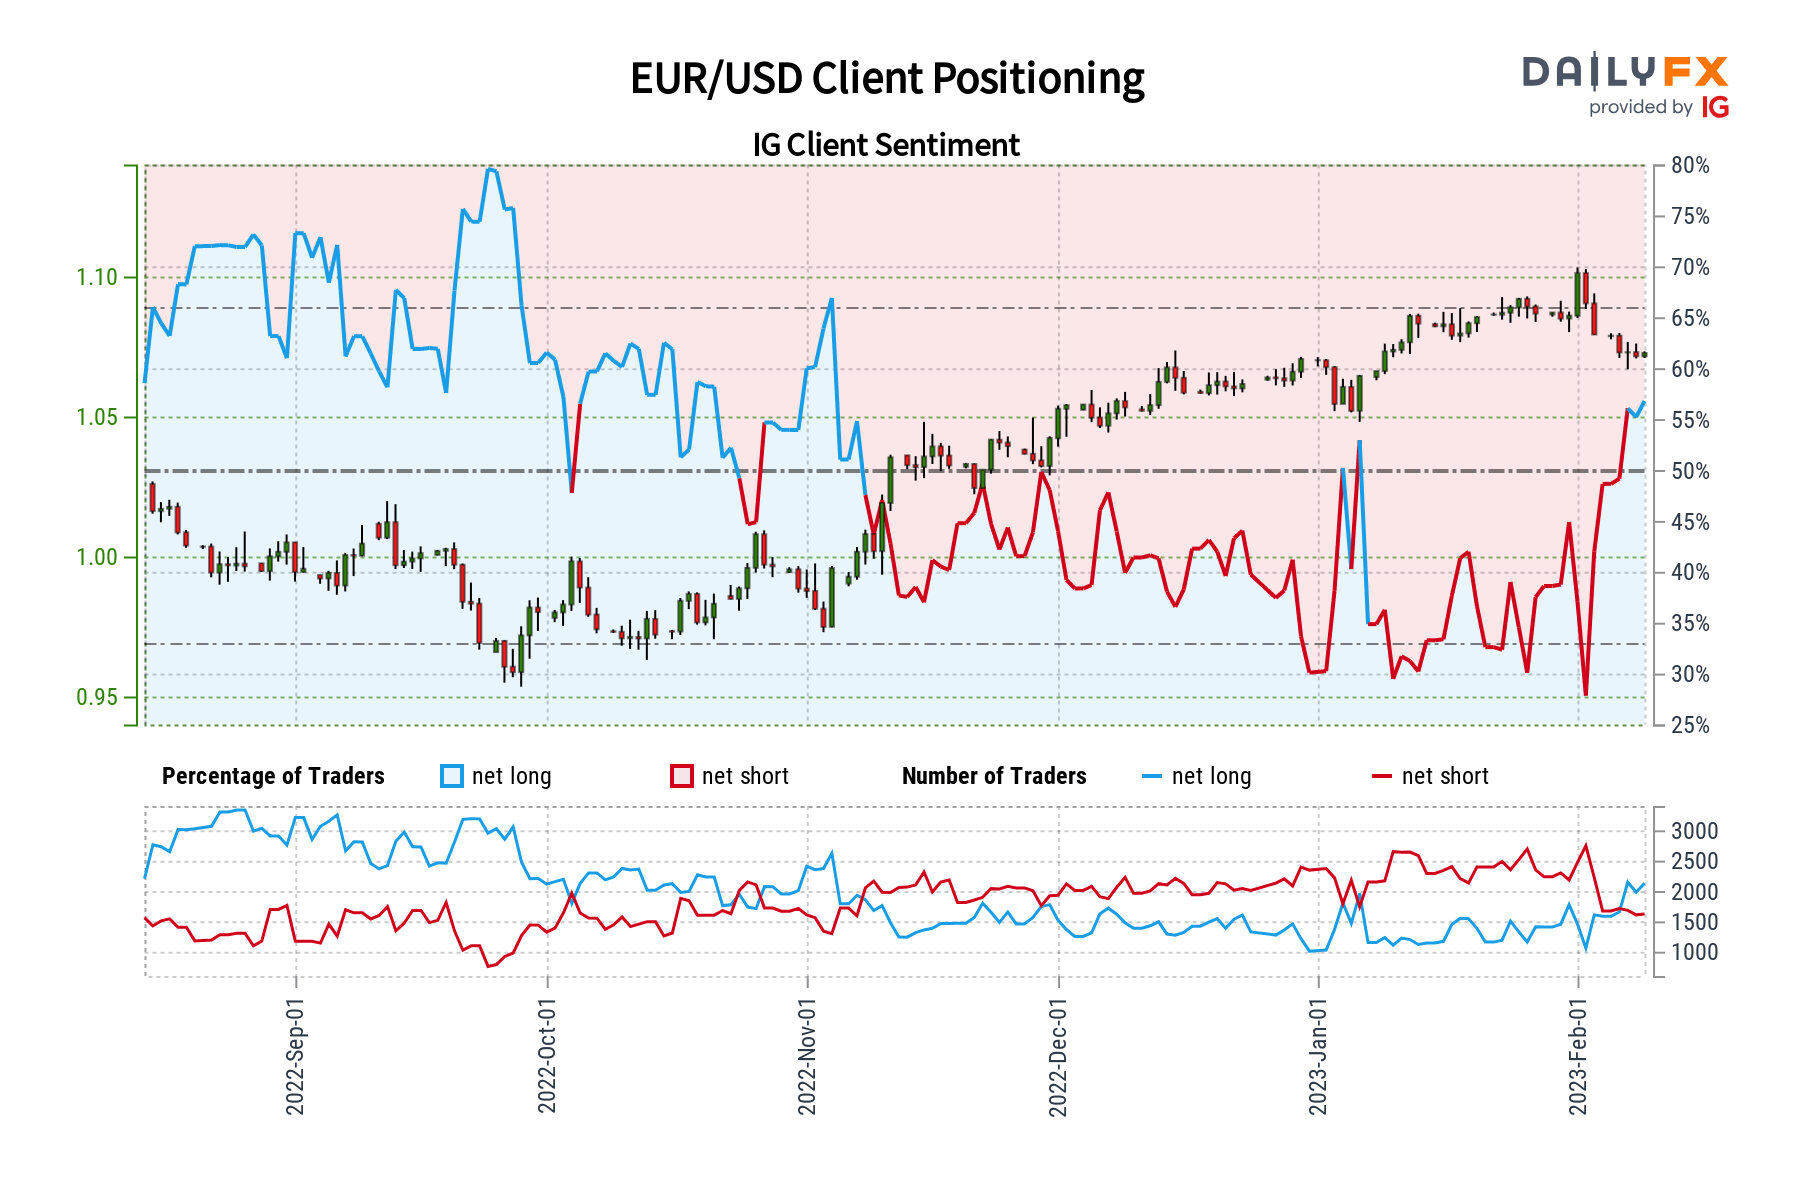 EUR/USD Sentiment Outlook - Bearish